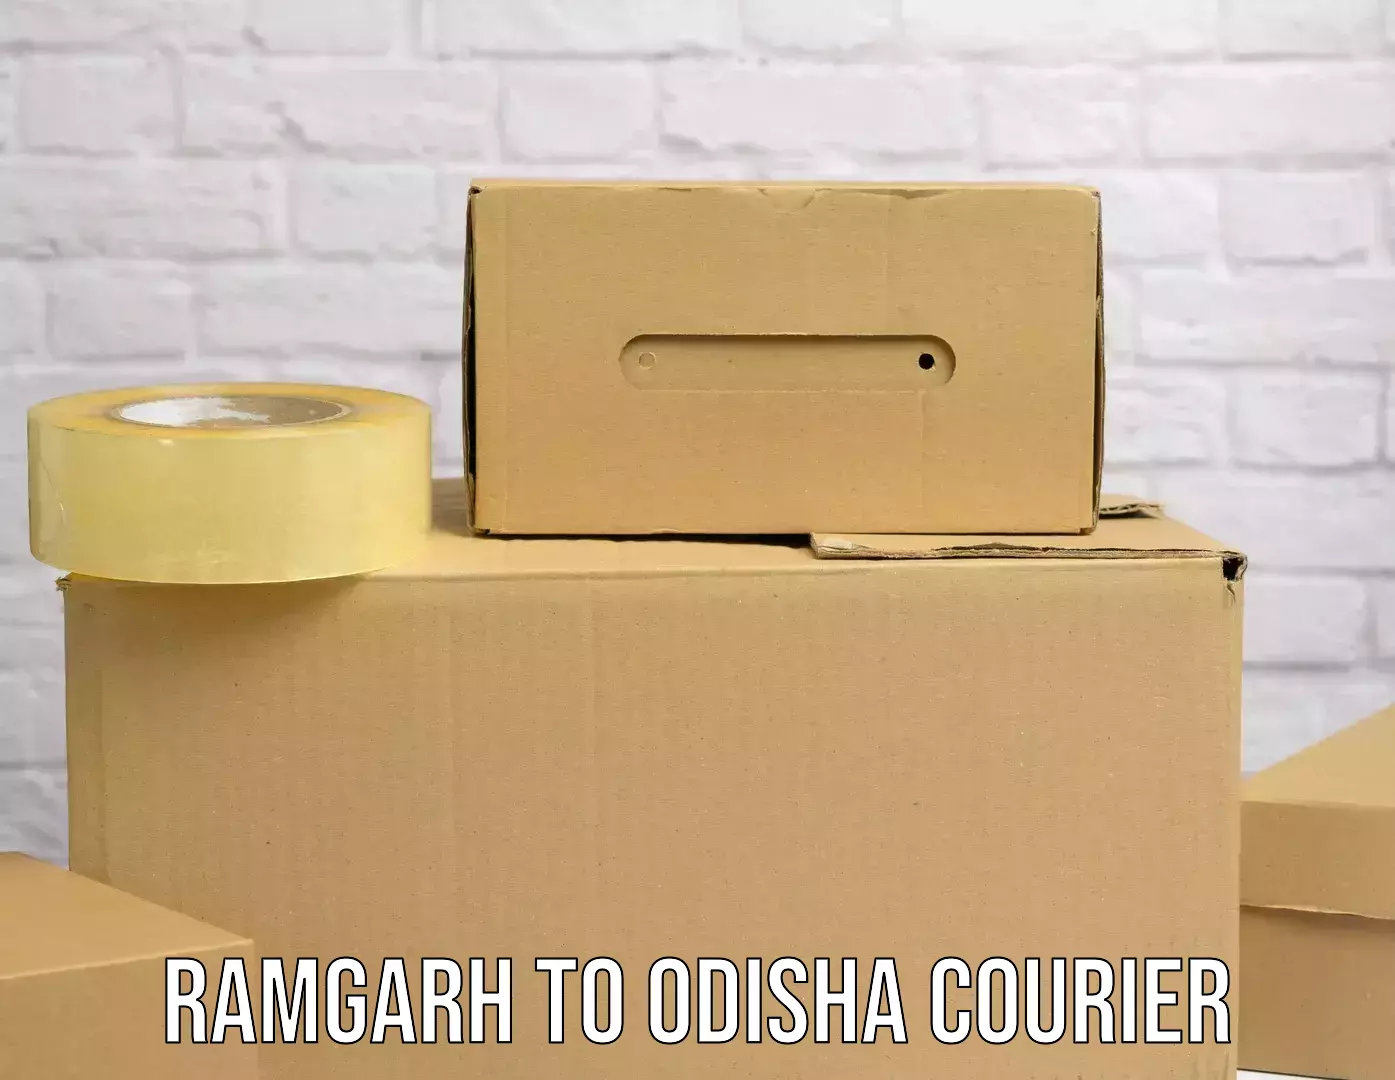 Customized delivery options Ramgarh to Odisha